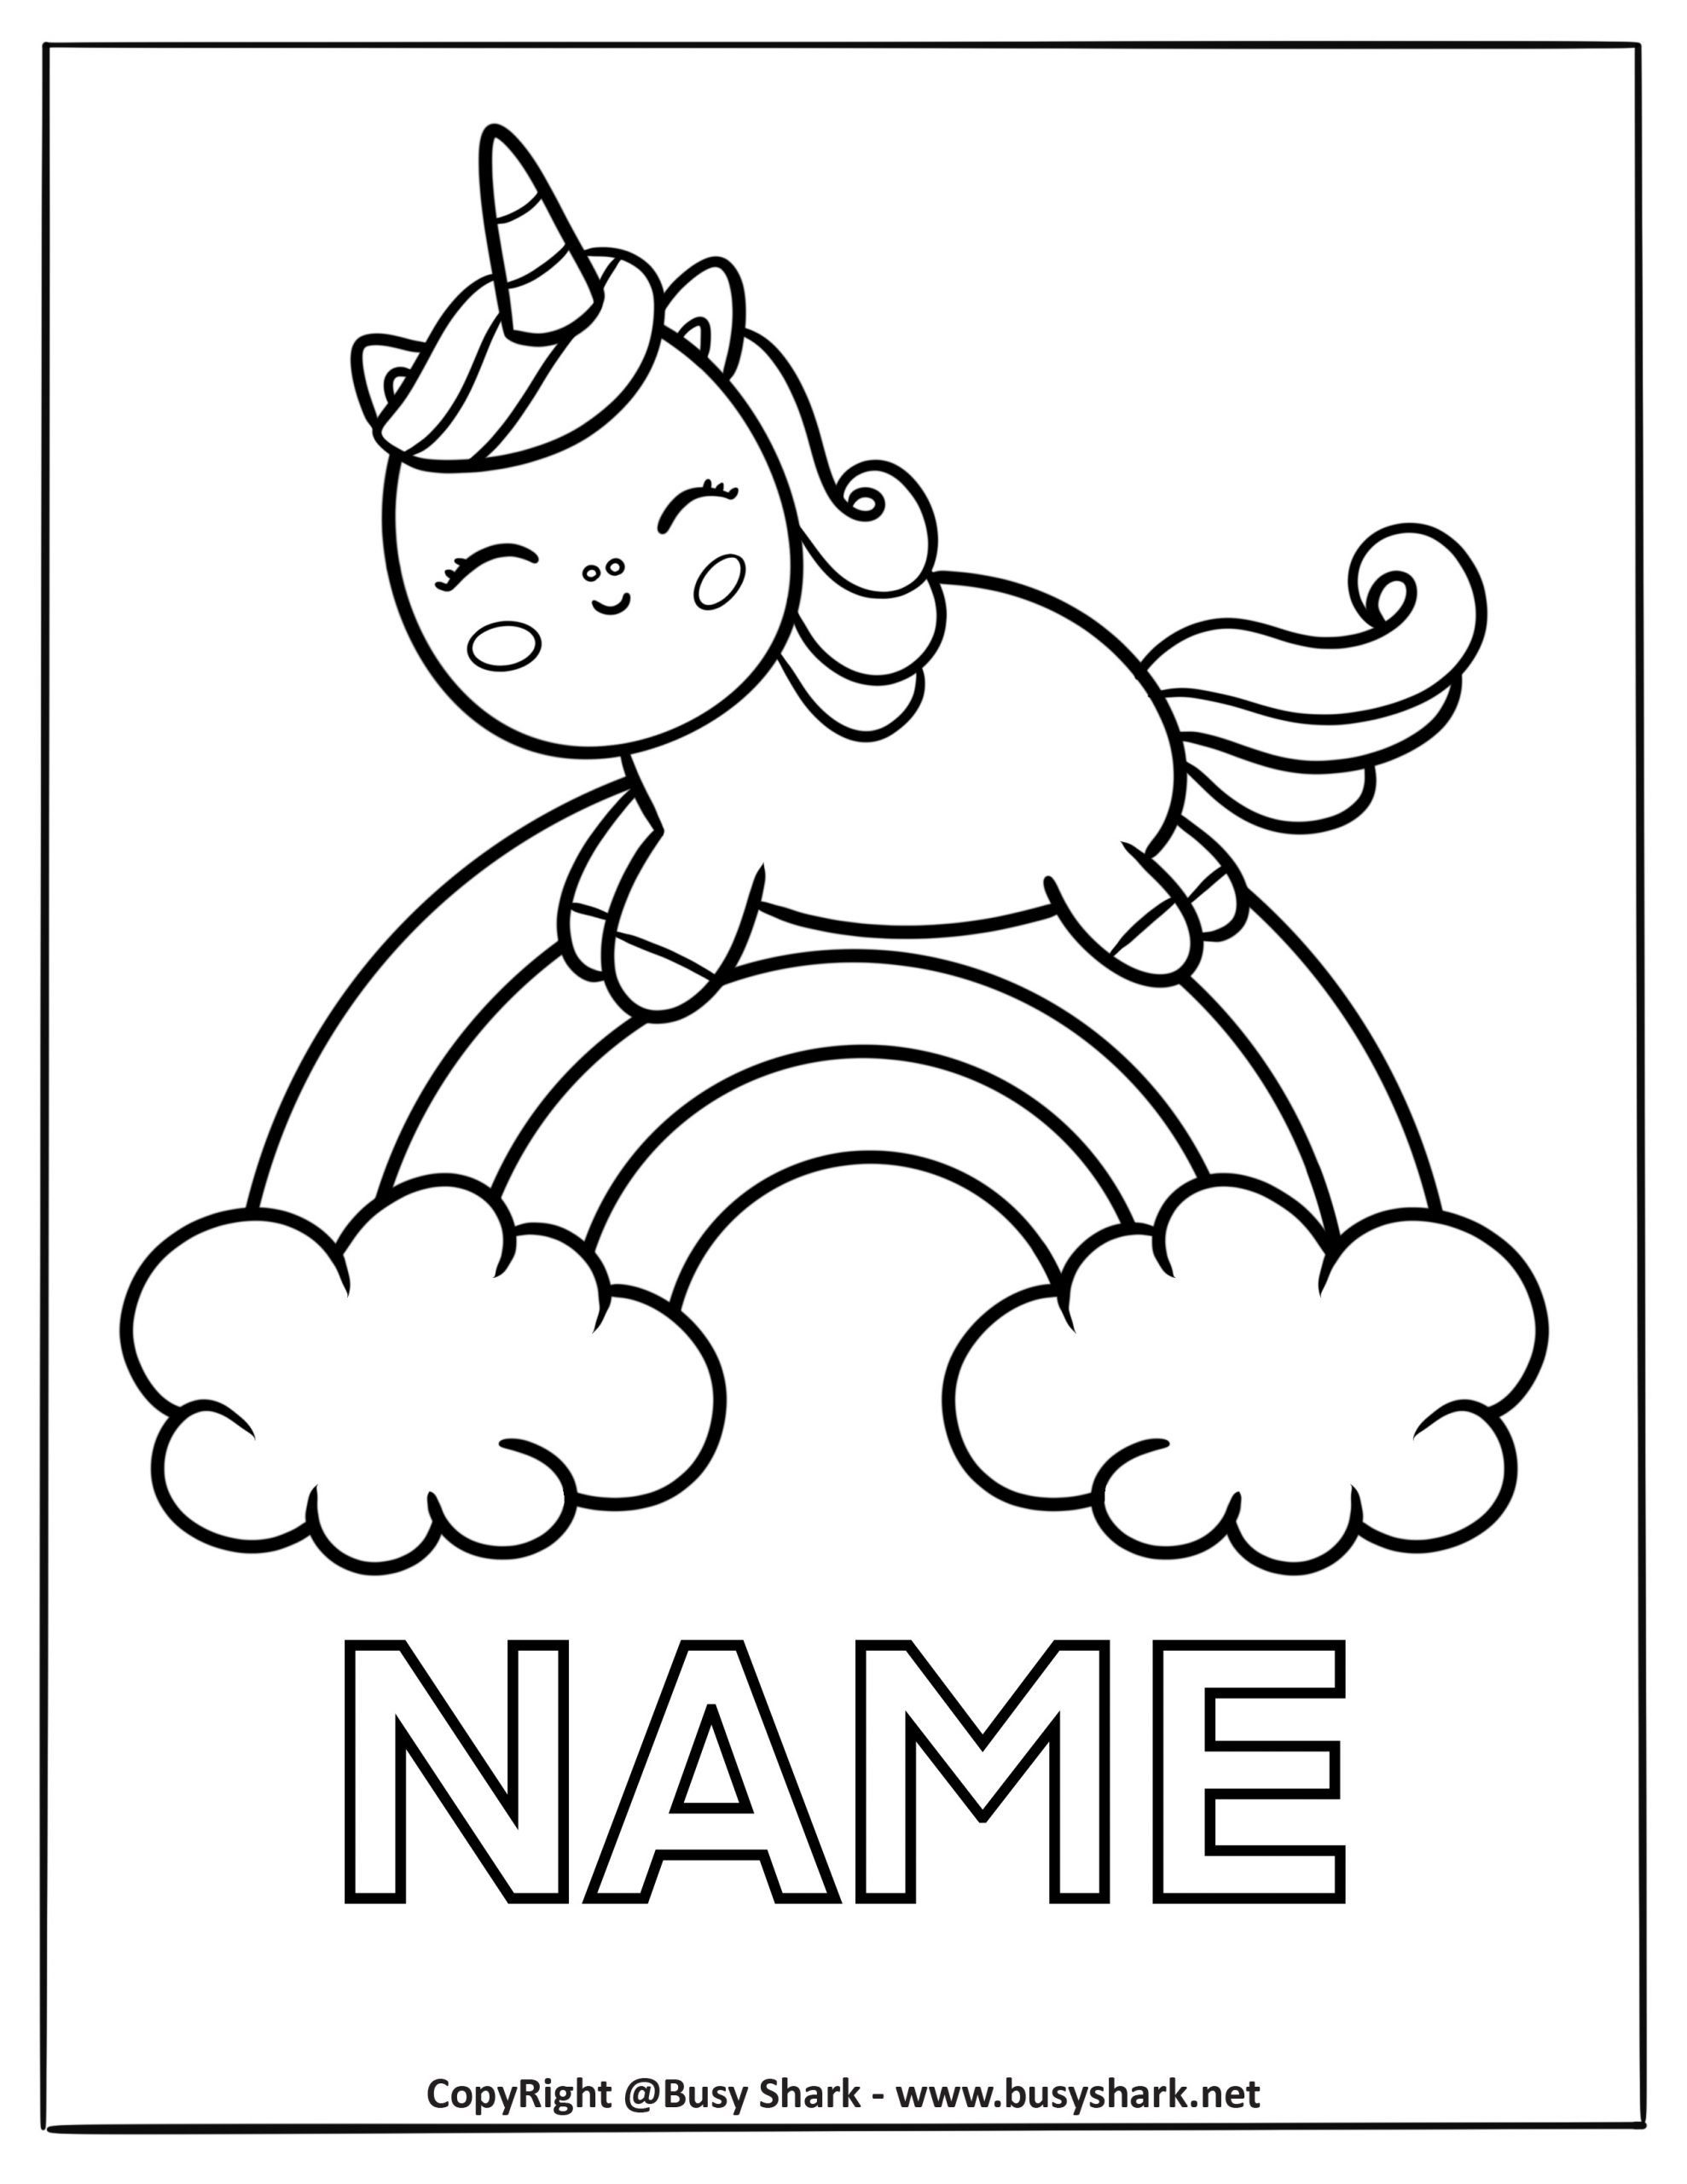 Unicorn editable name coloring pages free printable